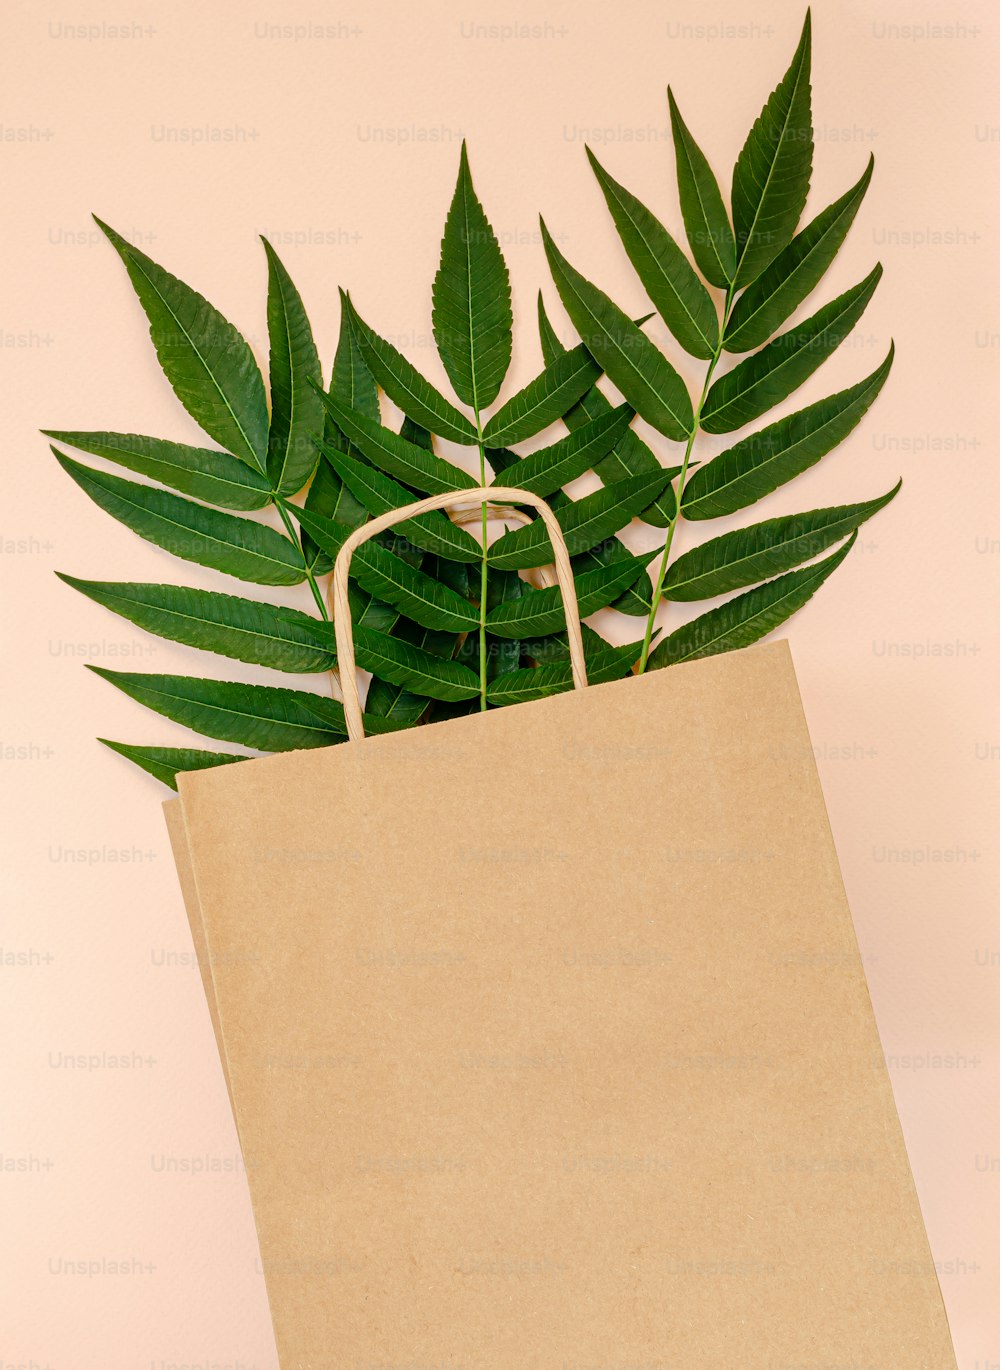 Maqueta de bolsa de papel artesanal con hojas verdes sobre fondo rosa. Concepto de residuo cero